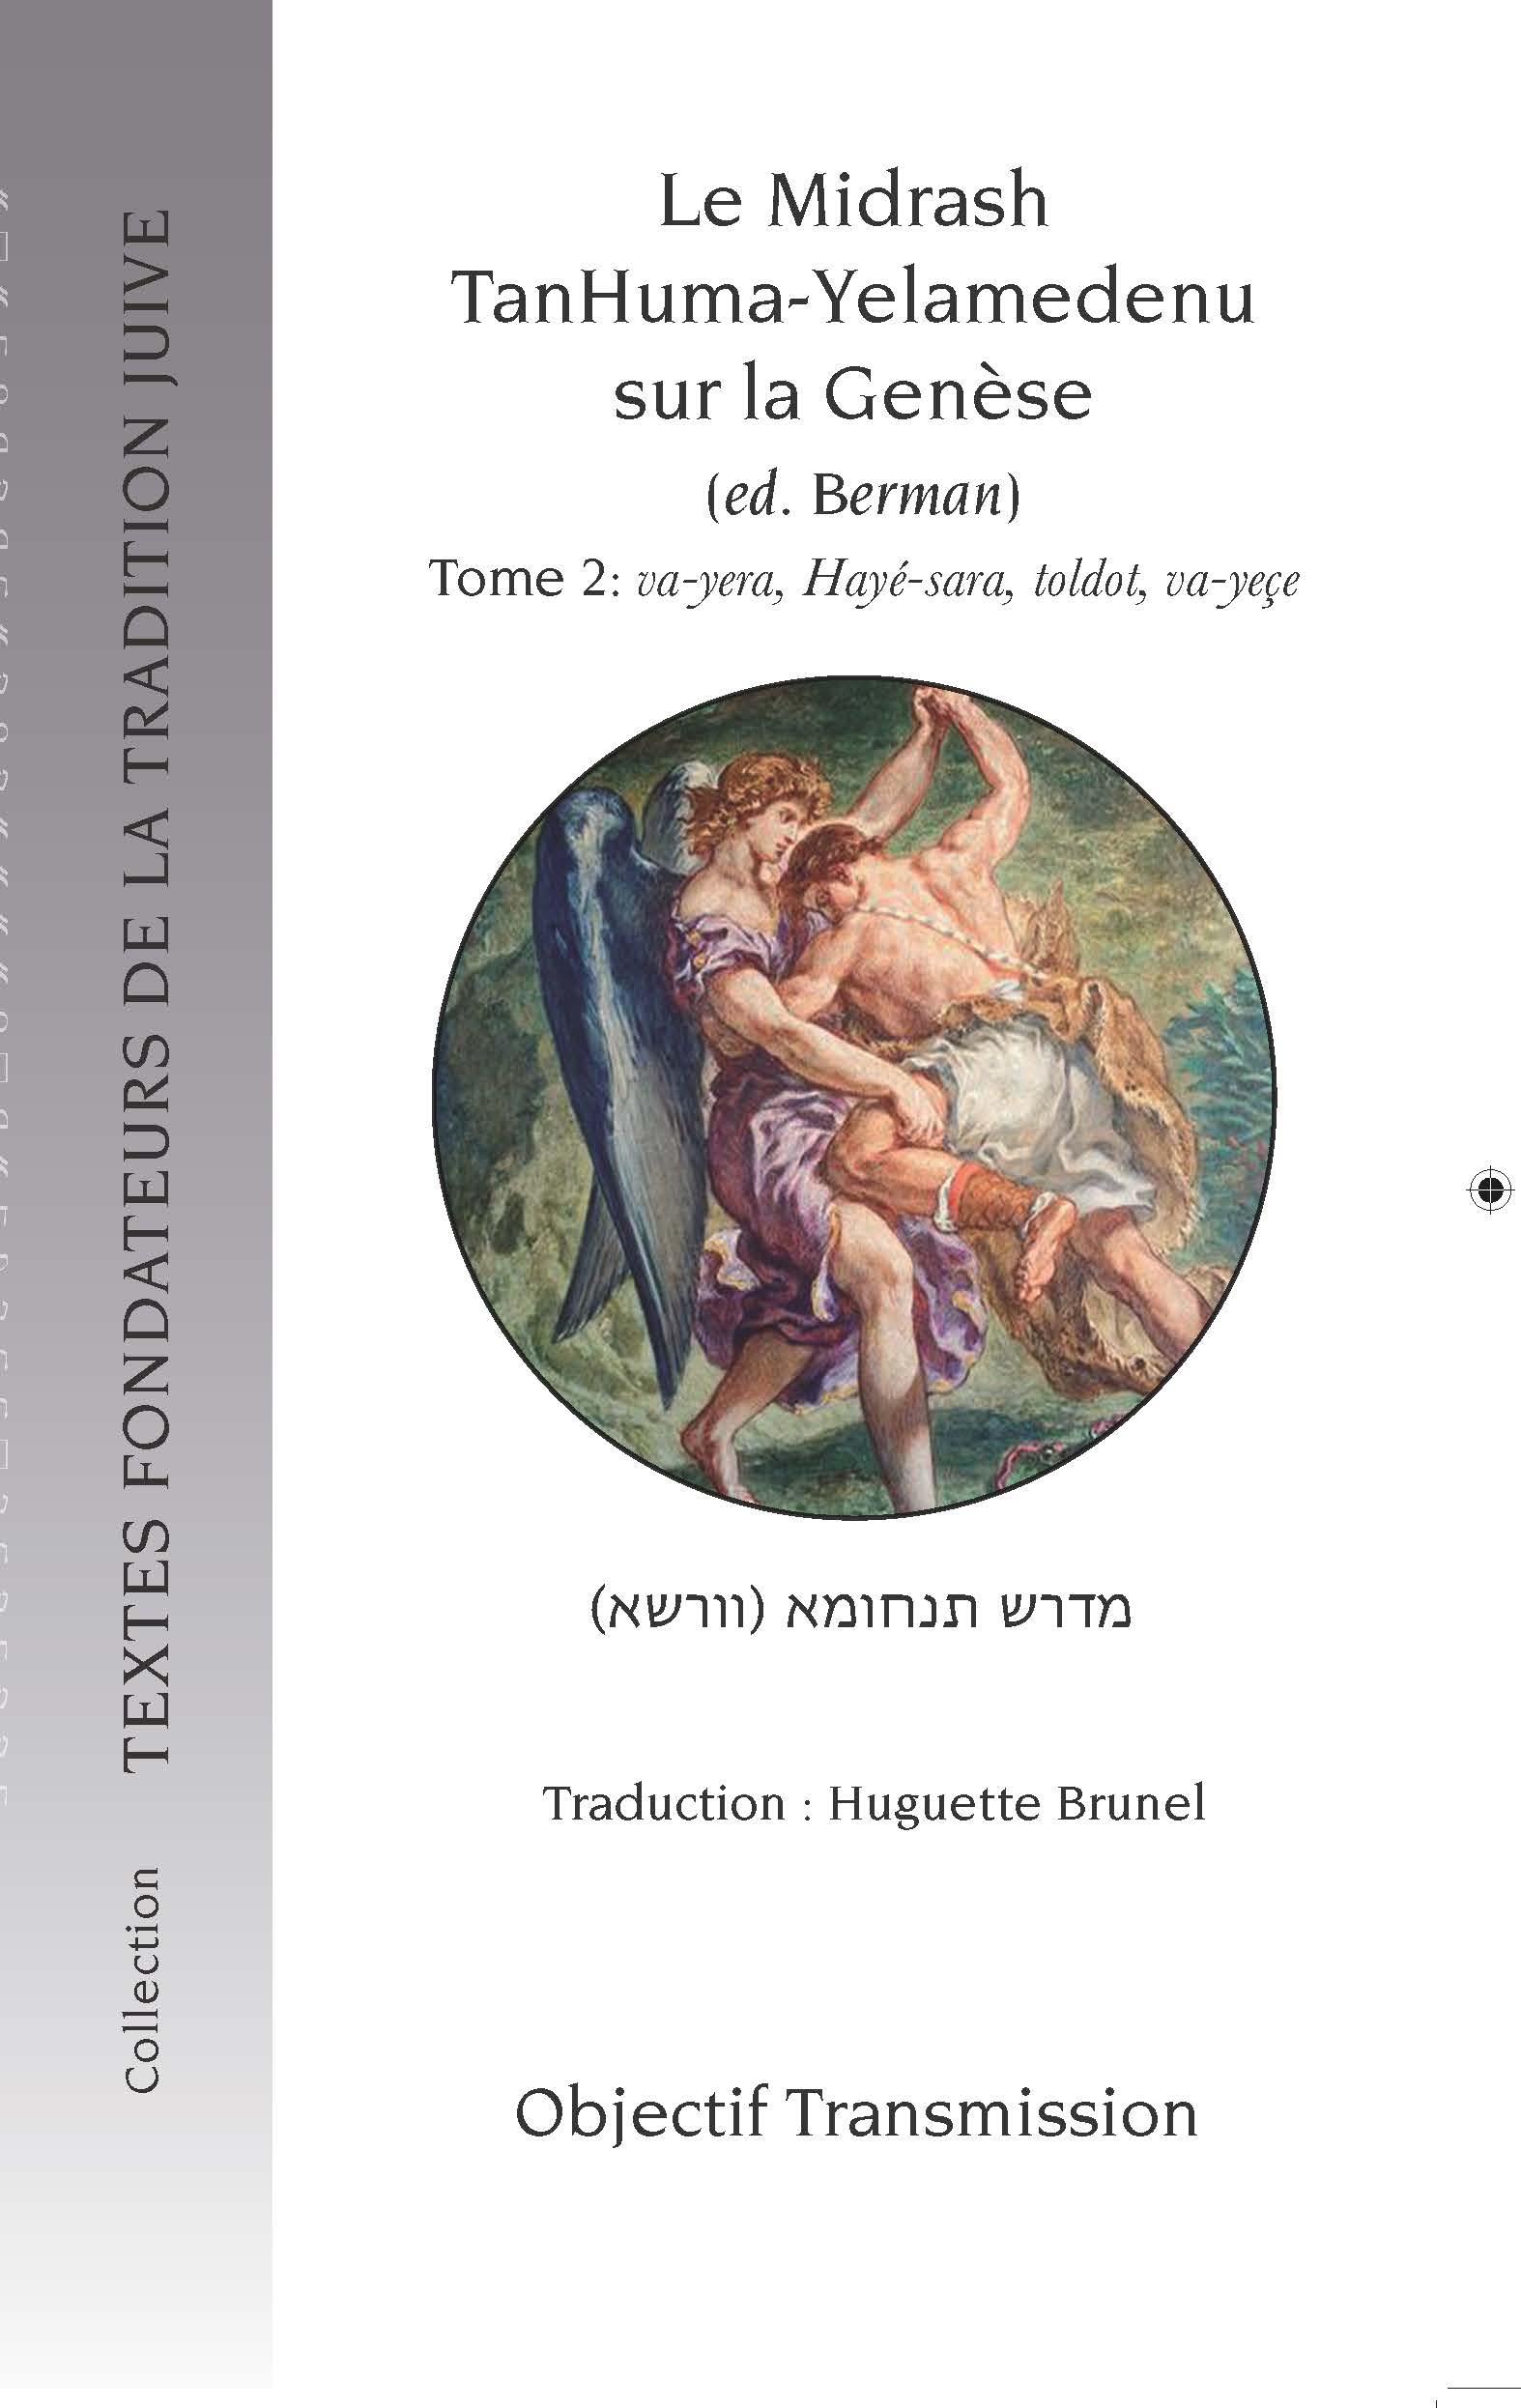 Le Midrash TanHuma-Yelamedenu sur la Genèse (version Berman) Tome 2 